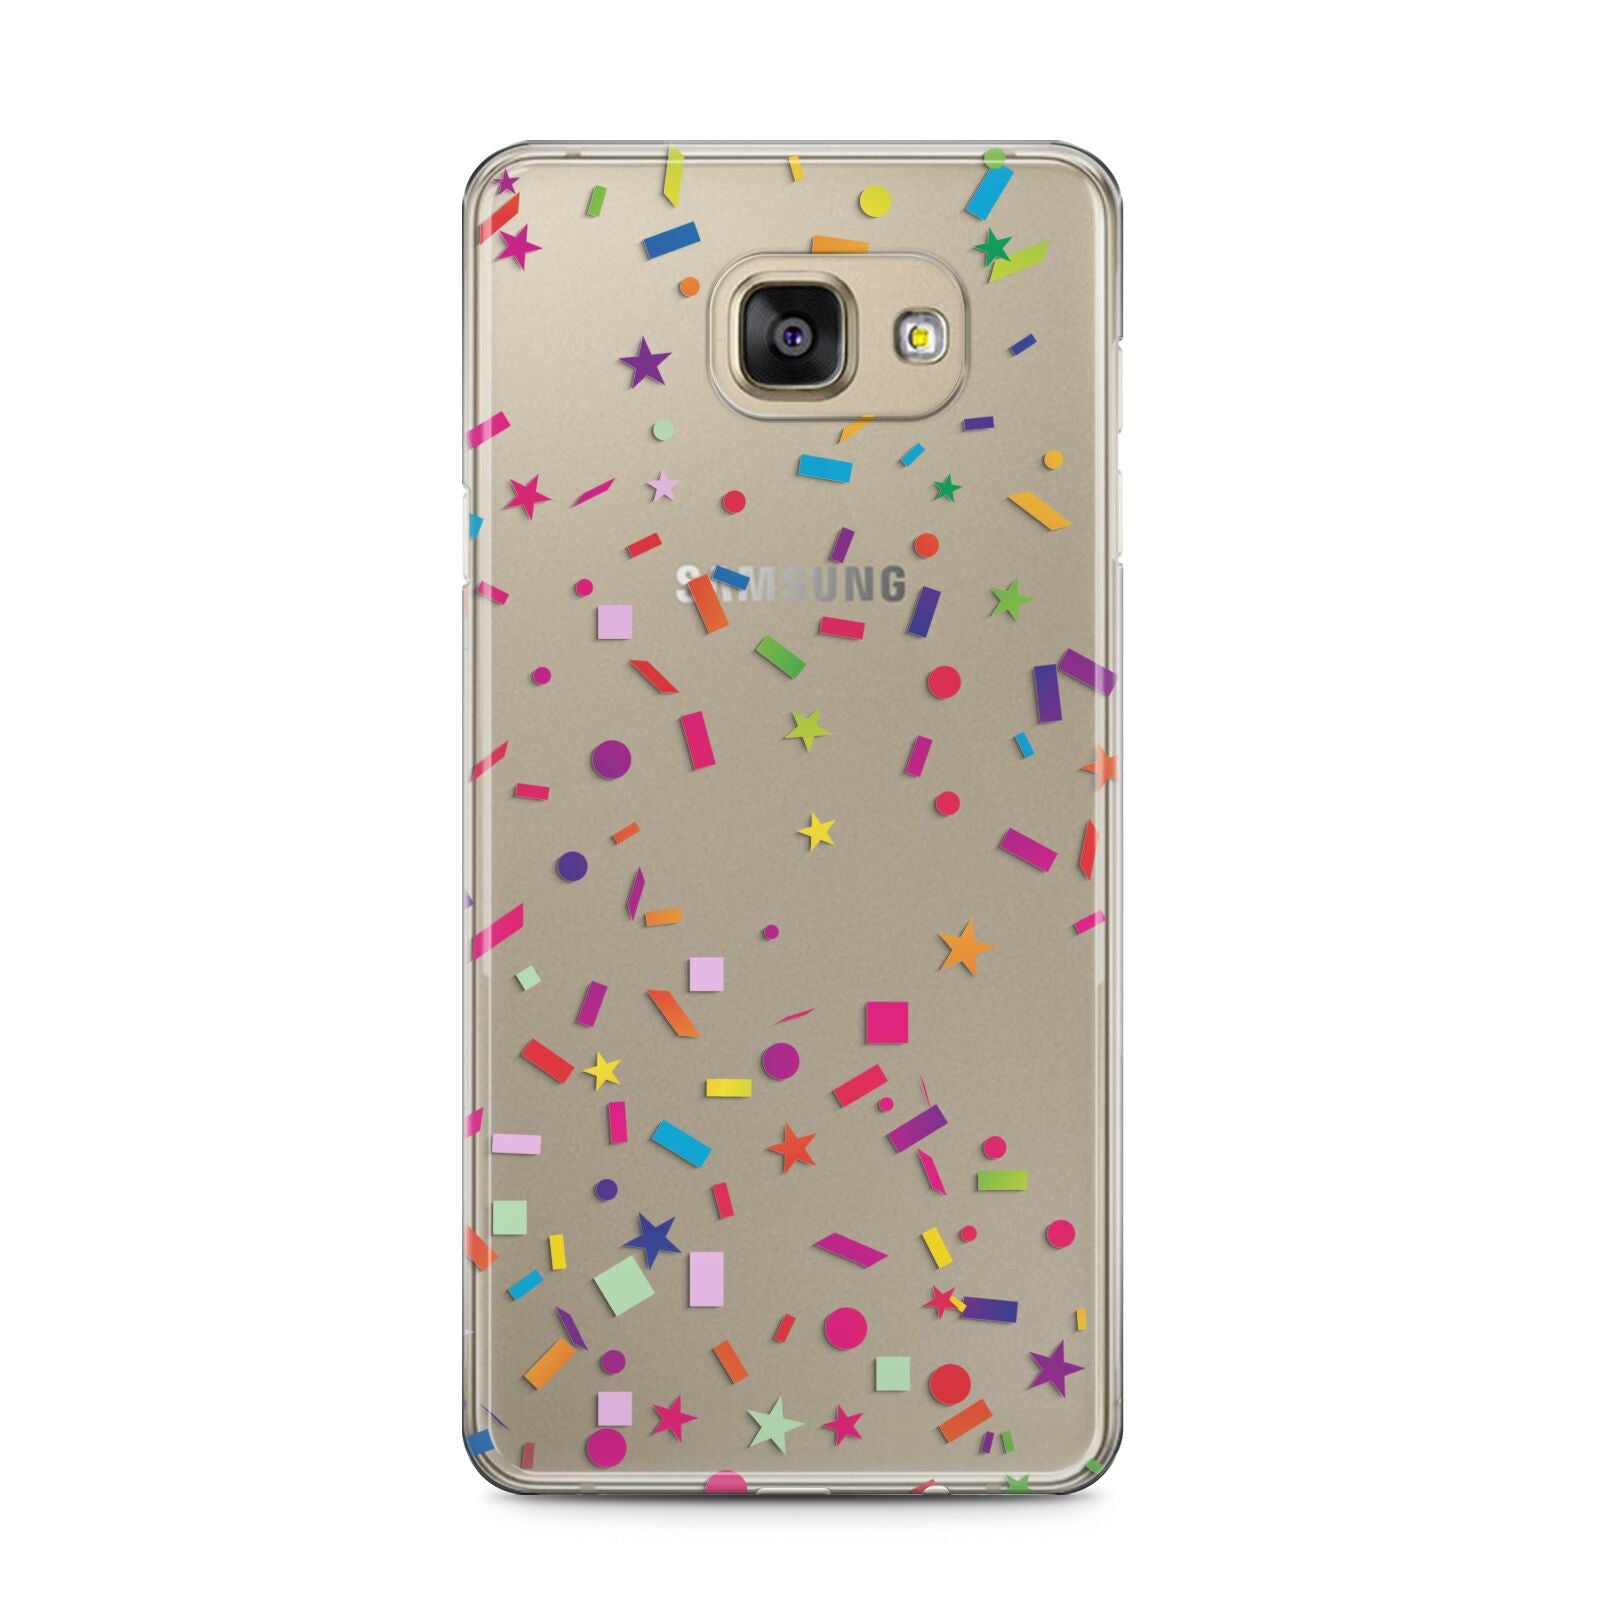 Confetti Samsung Galaxy A5 2016 Case on gold phone